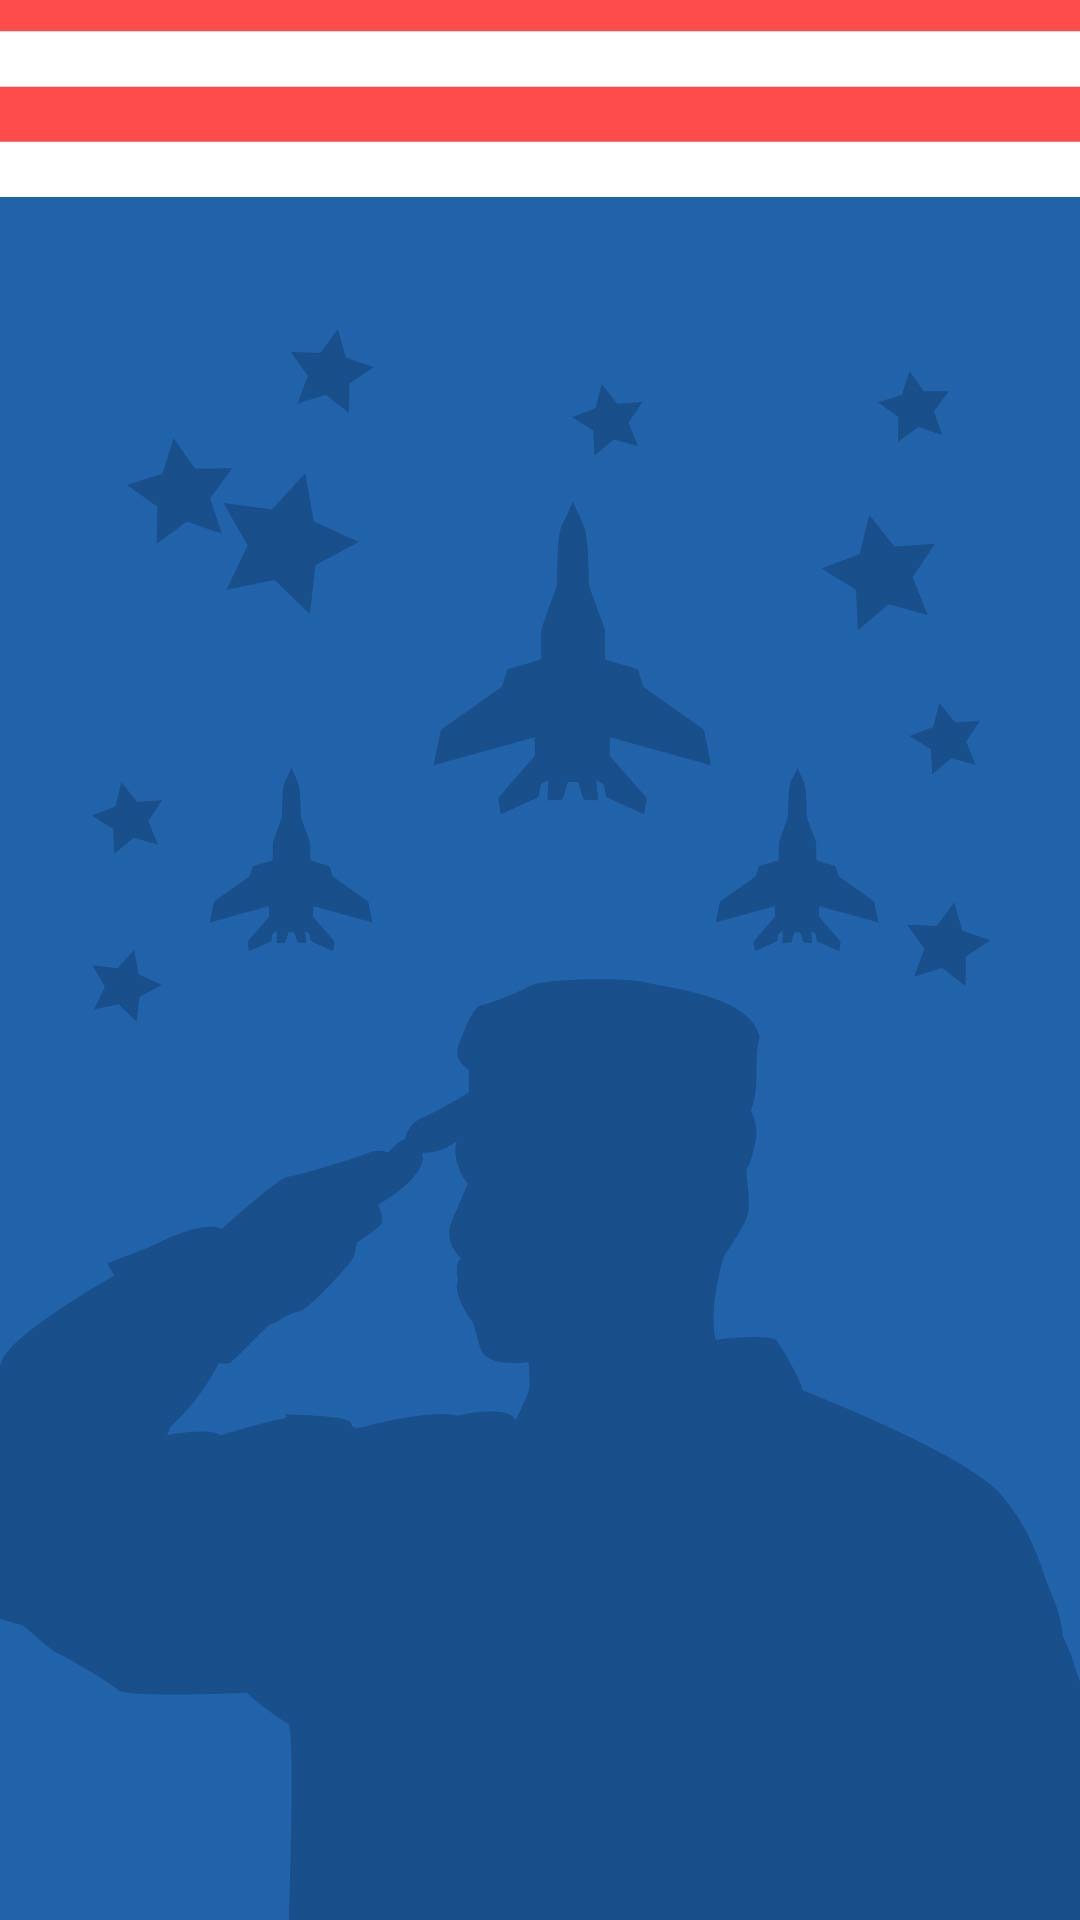 air force logo iphone wallpaper